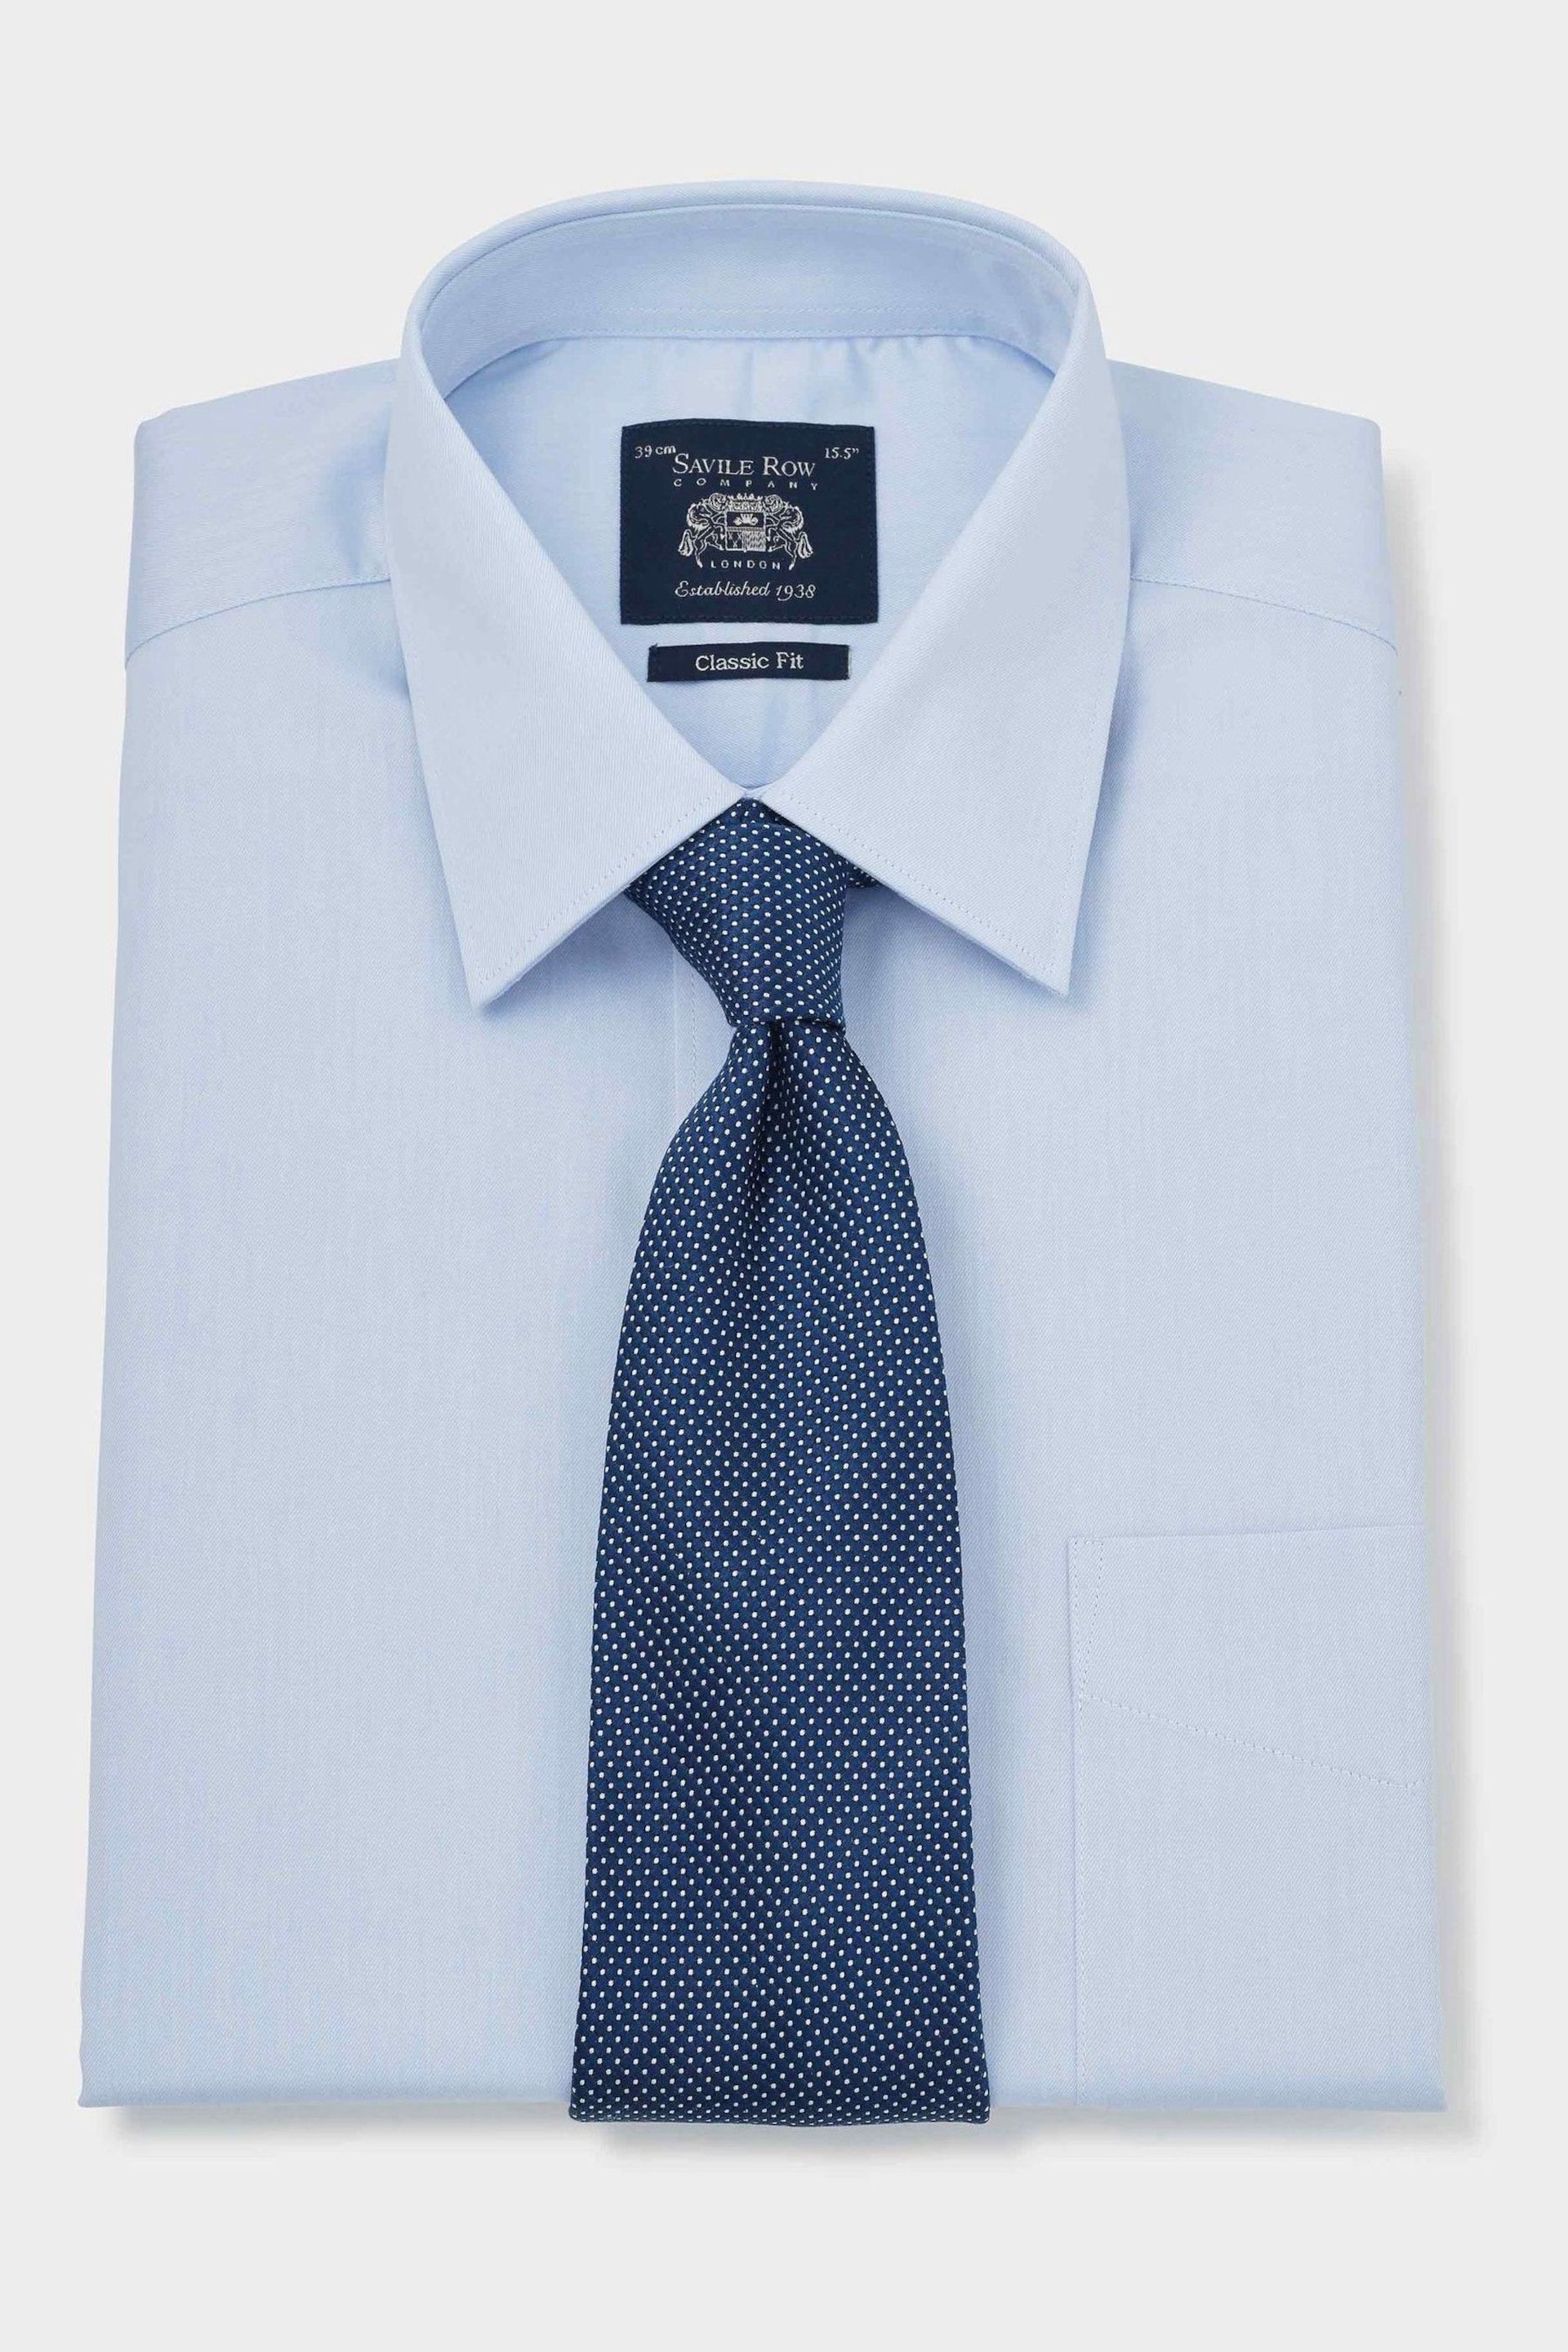 Savile Row Company Blue Twill Classic Fit Single Cuff Shirt - Image 3 of 5